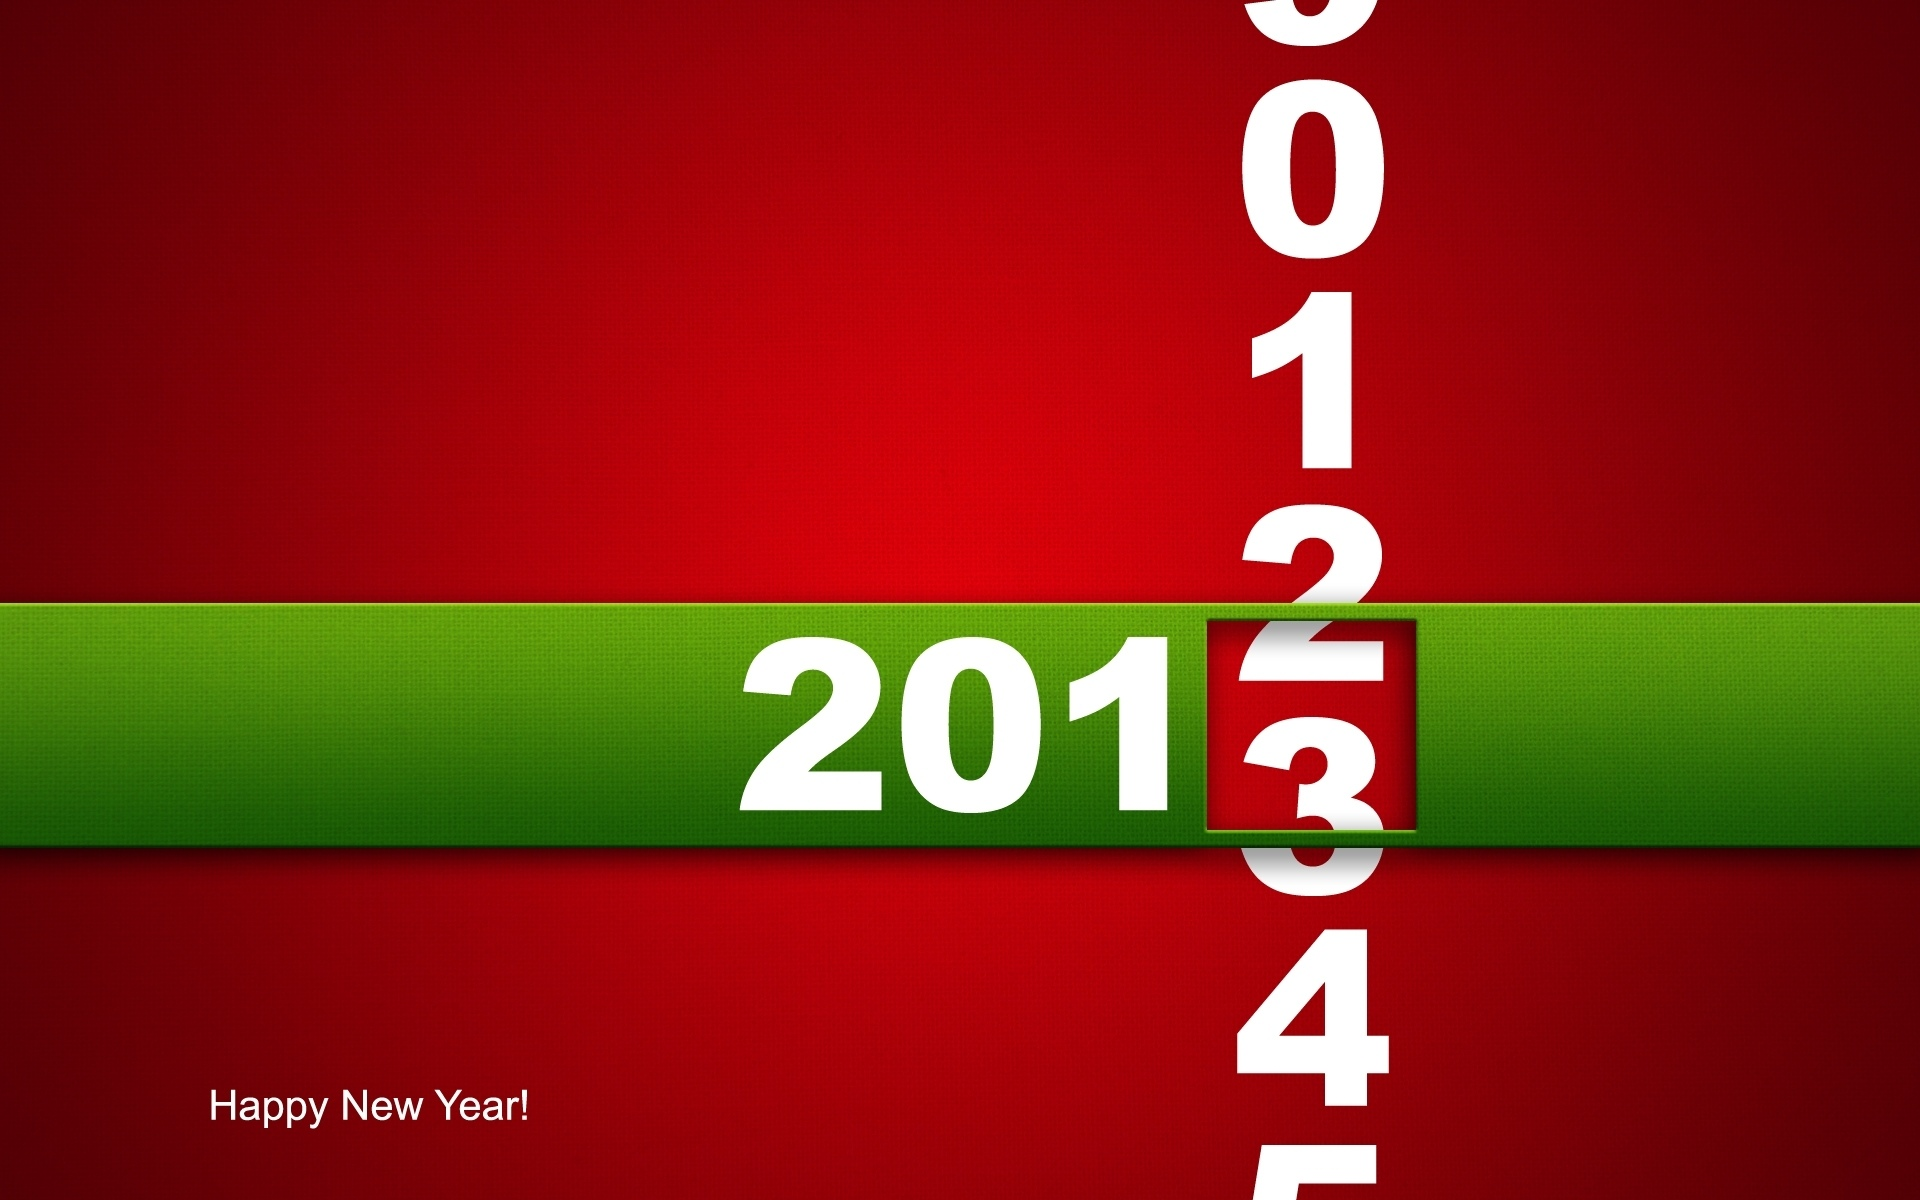 Новый год, смена года, 2013, new yaer, happy new year